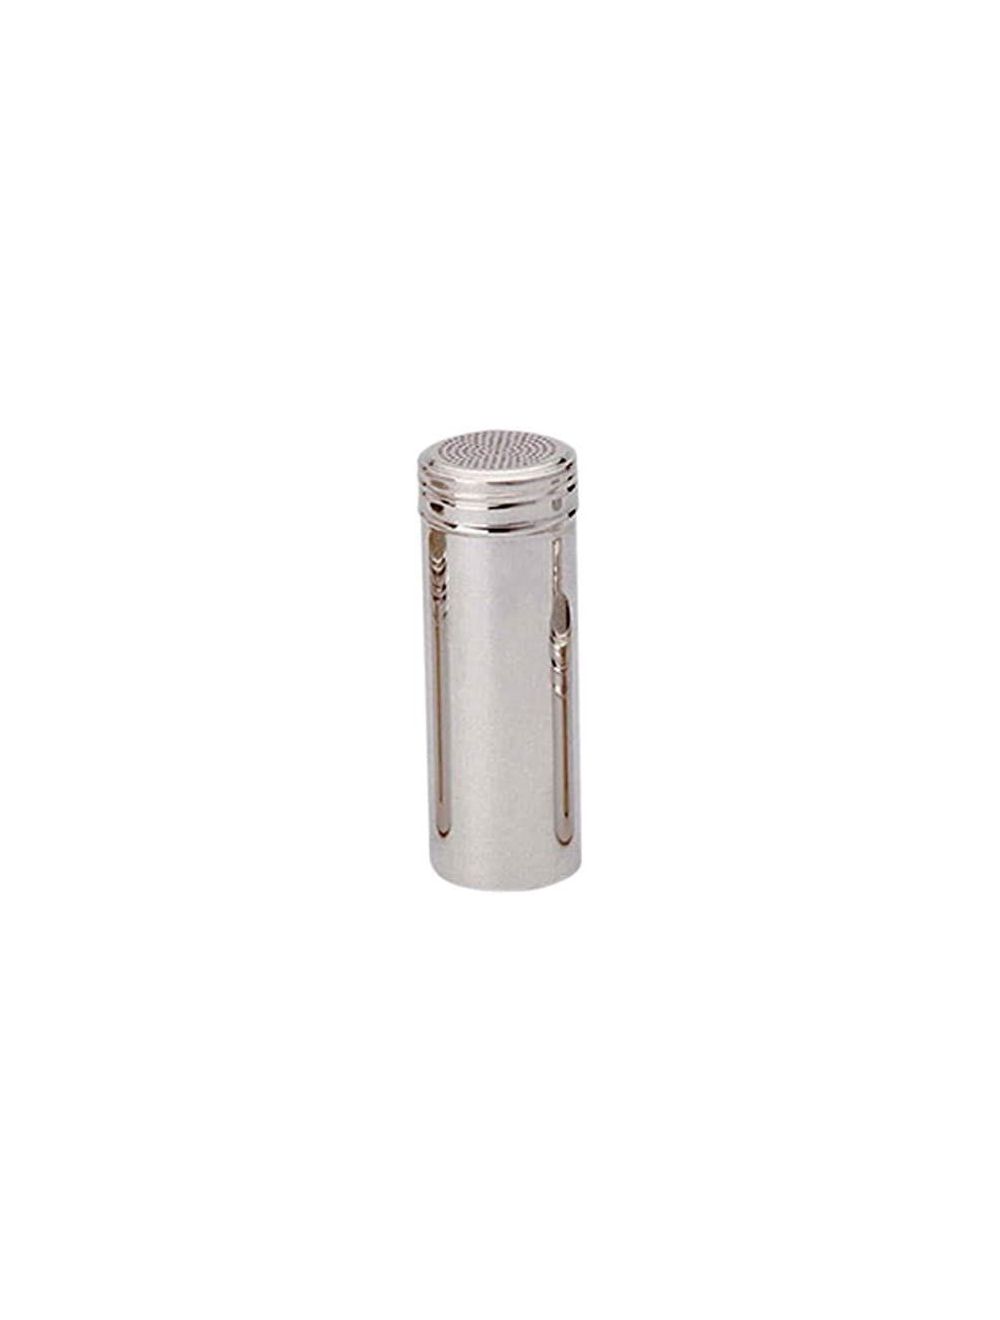 Raj Spice Dispenser Without Handle Jumbo, Silver, CSD004